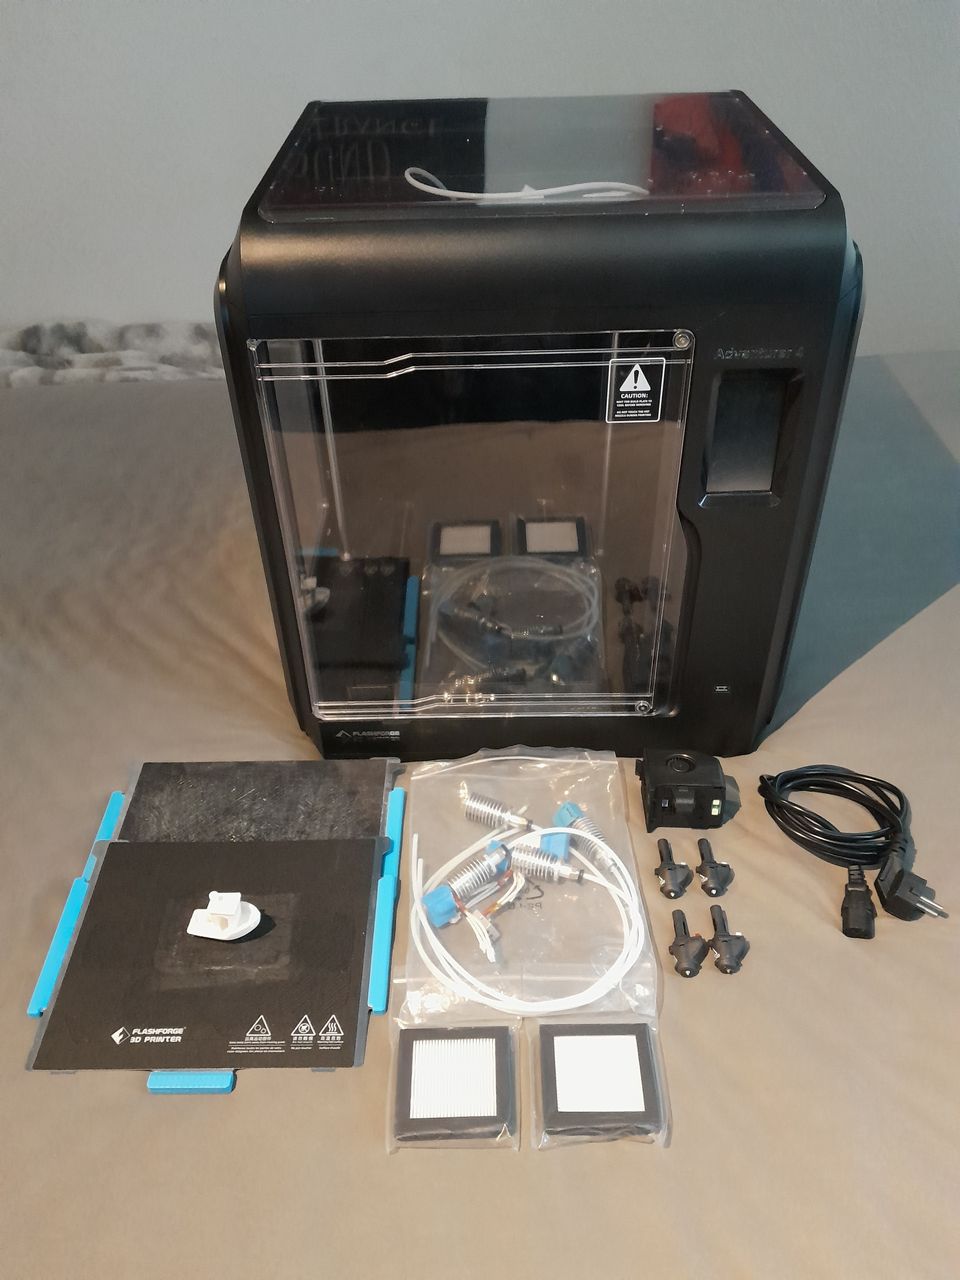 3D printer: Flashforge adventurer 4